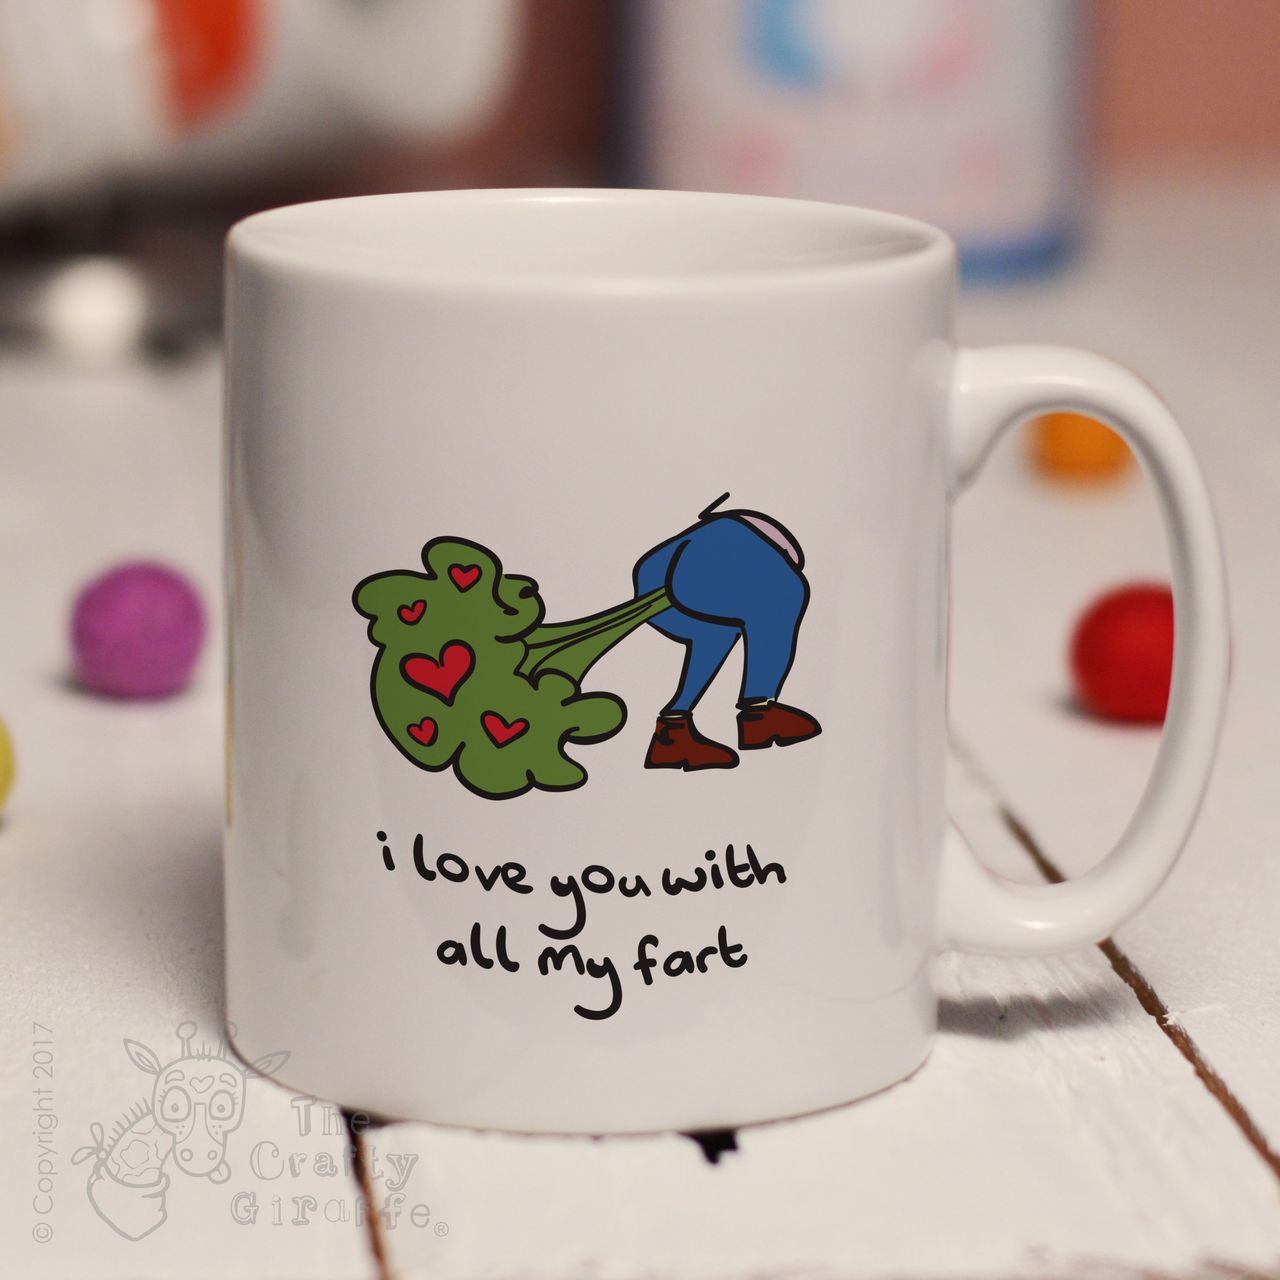 I love you with all my fart mug